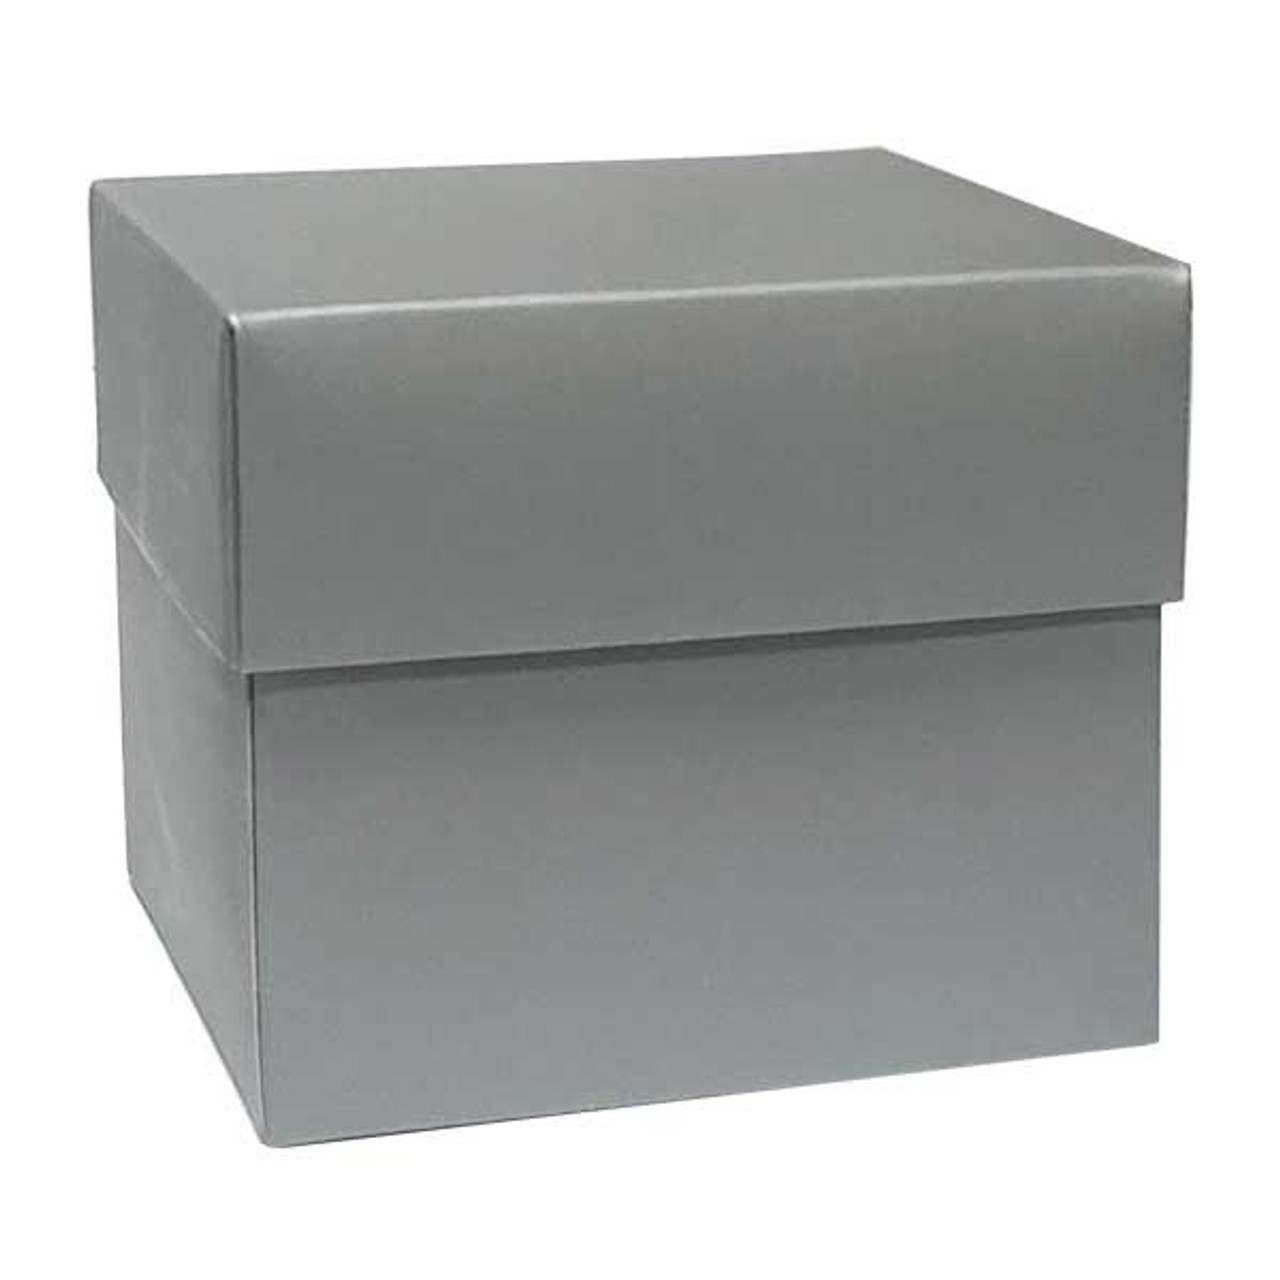 6"x6"x4" Deluxe Gourmet Gift Box-Metallic Silver